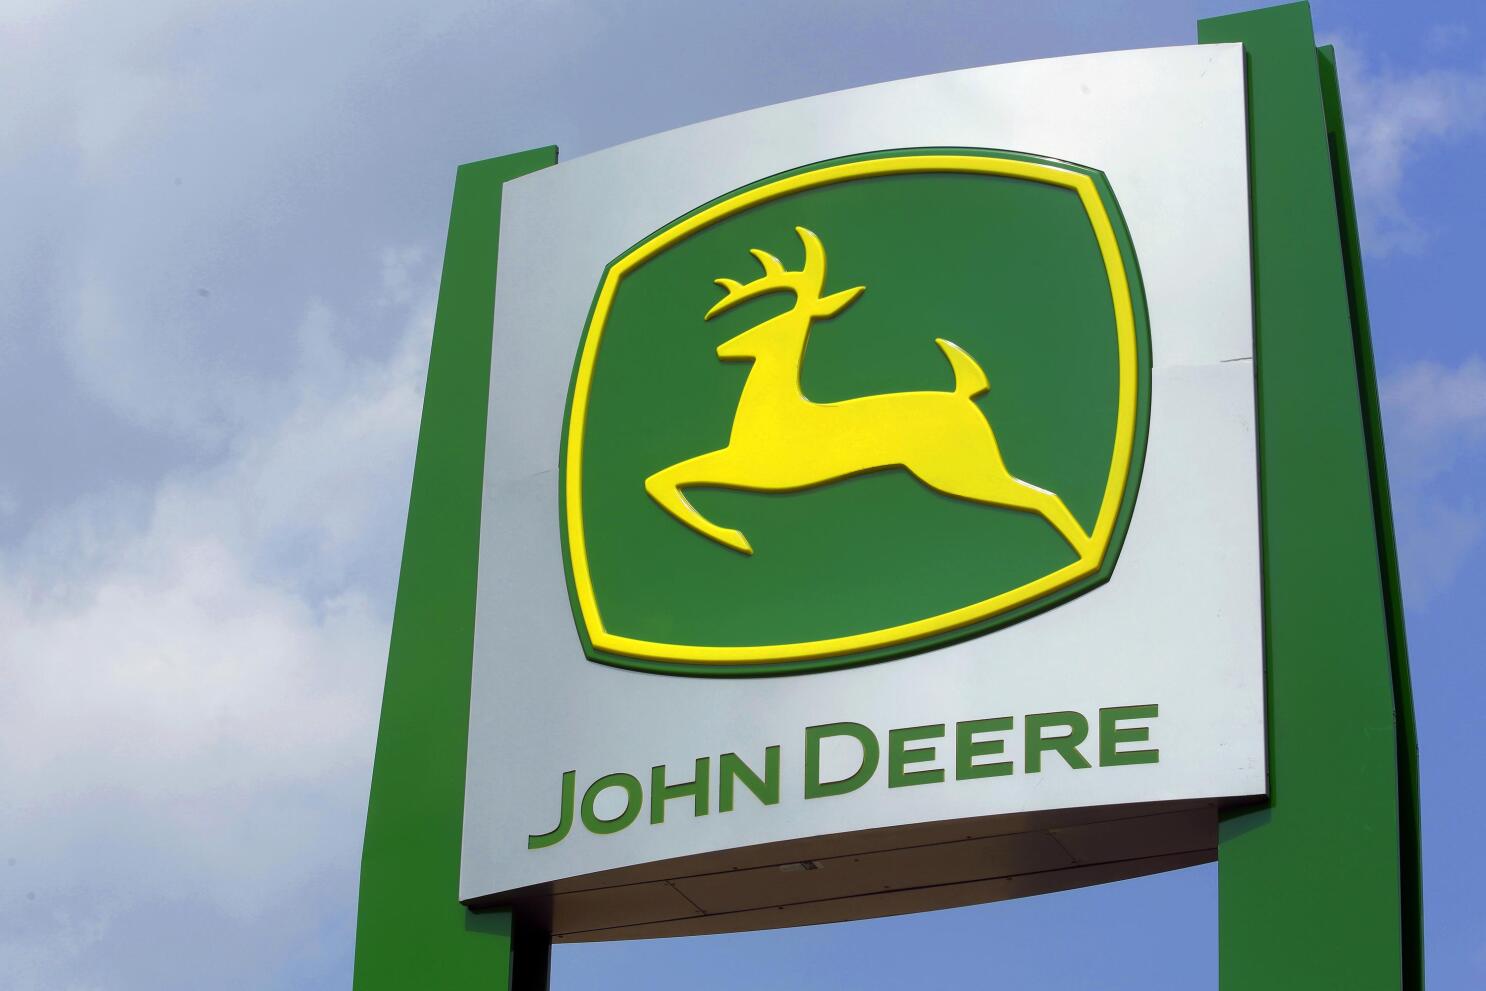 john deere logo